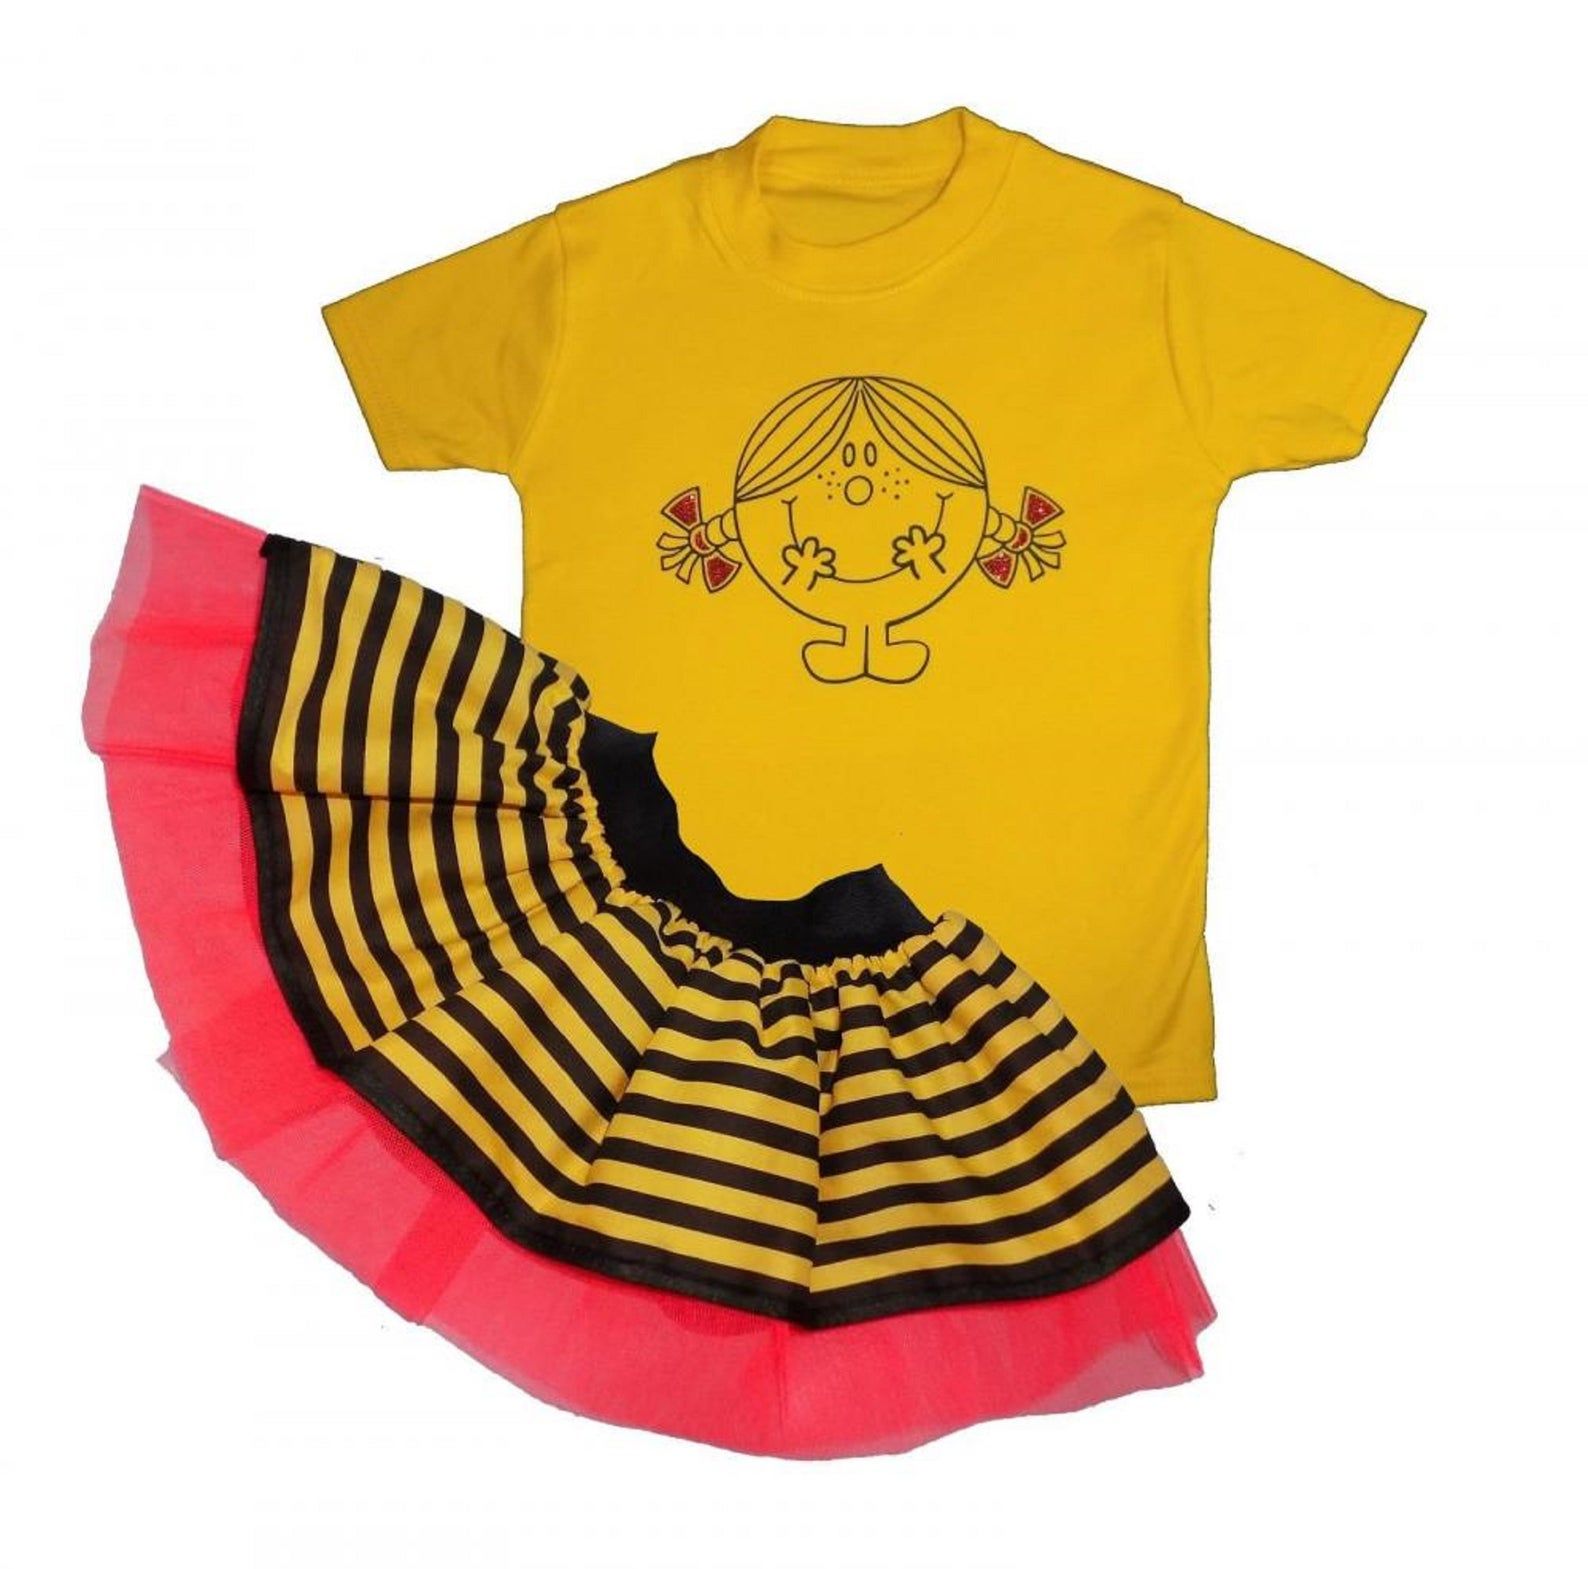 Image of Little Miss Sunshine costume.